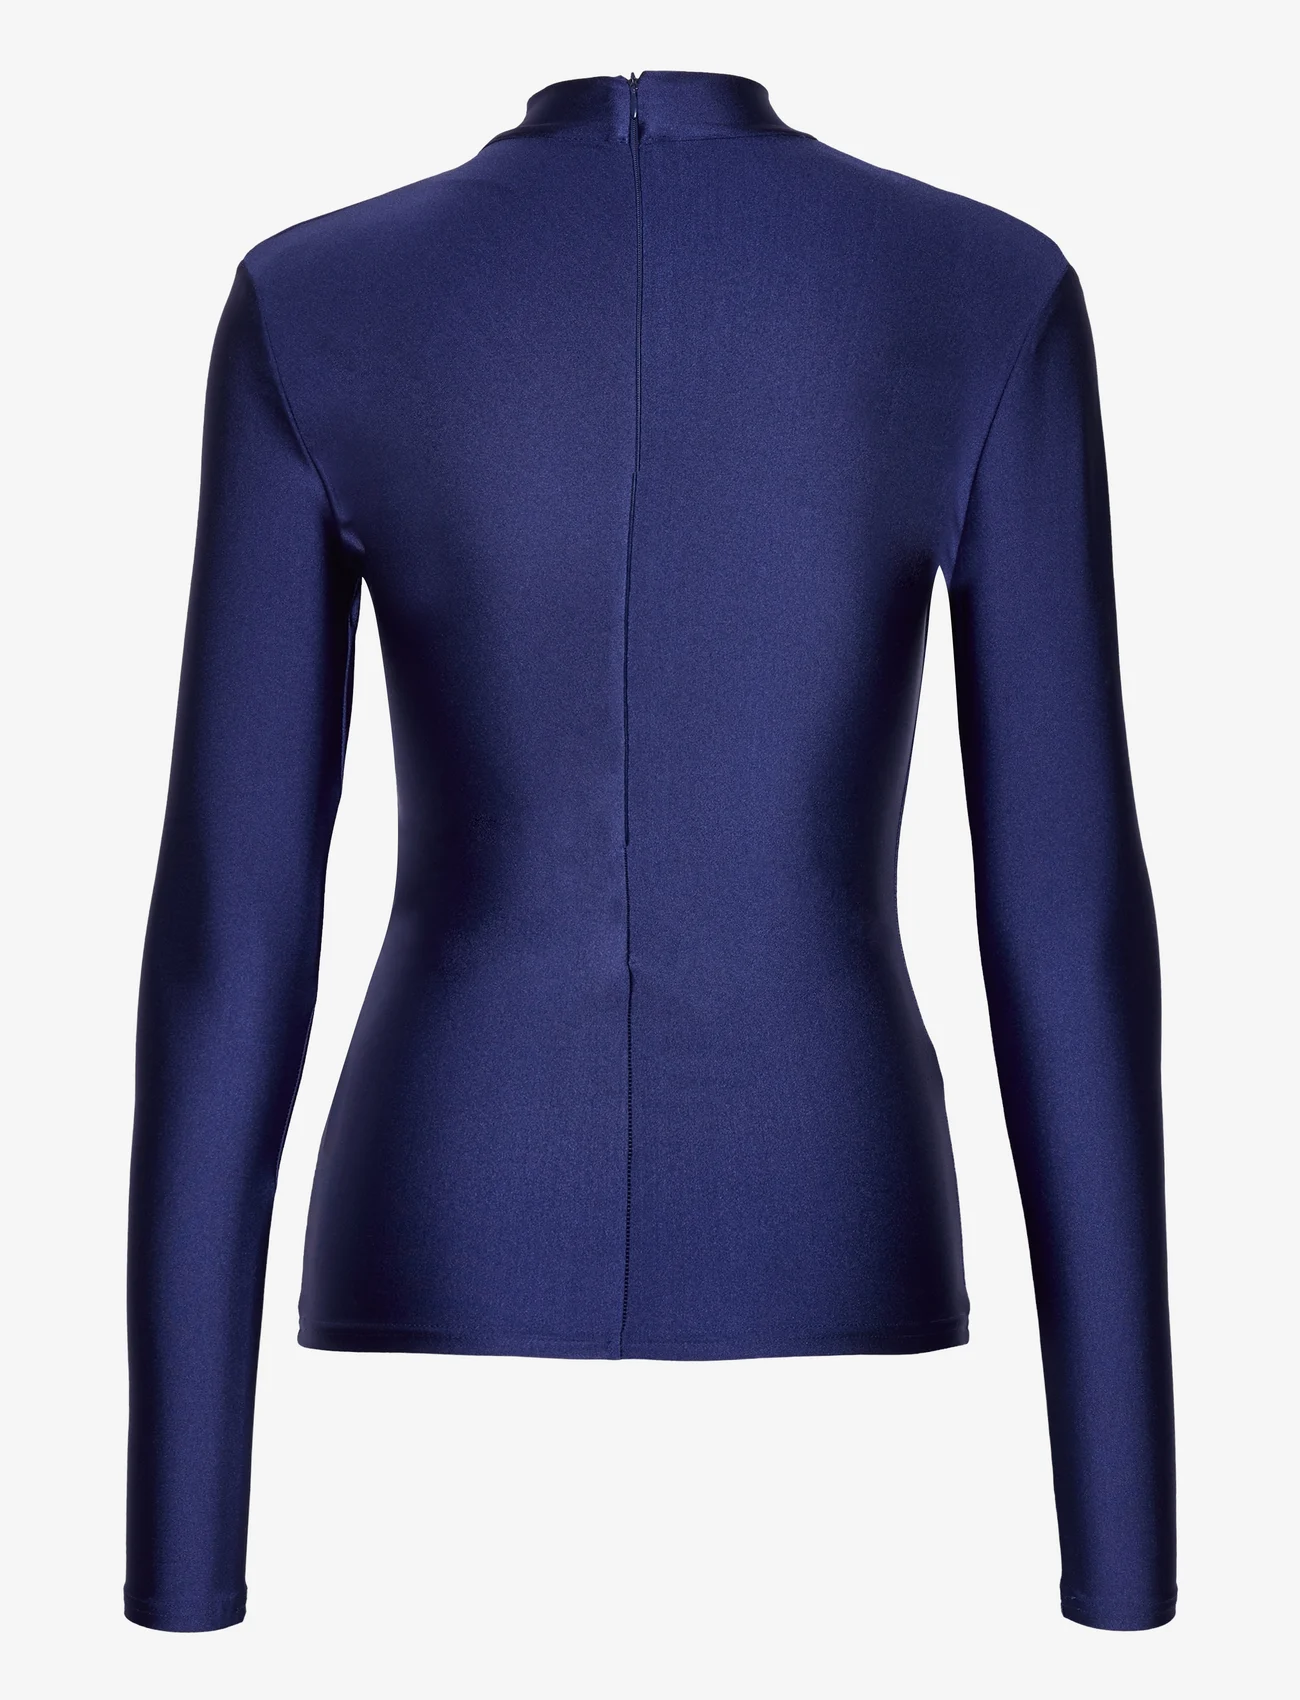 HAN Kjøbenhavn - Stretch Jersey  Draped Long Sleeve Top - long-sleeved tops - dark blue - 1